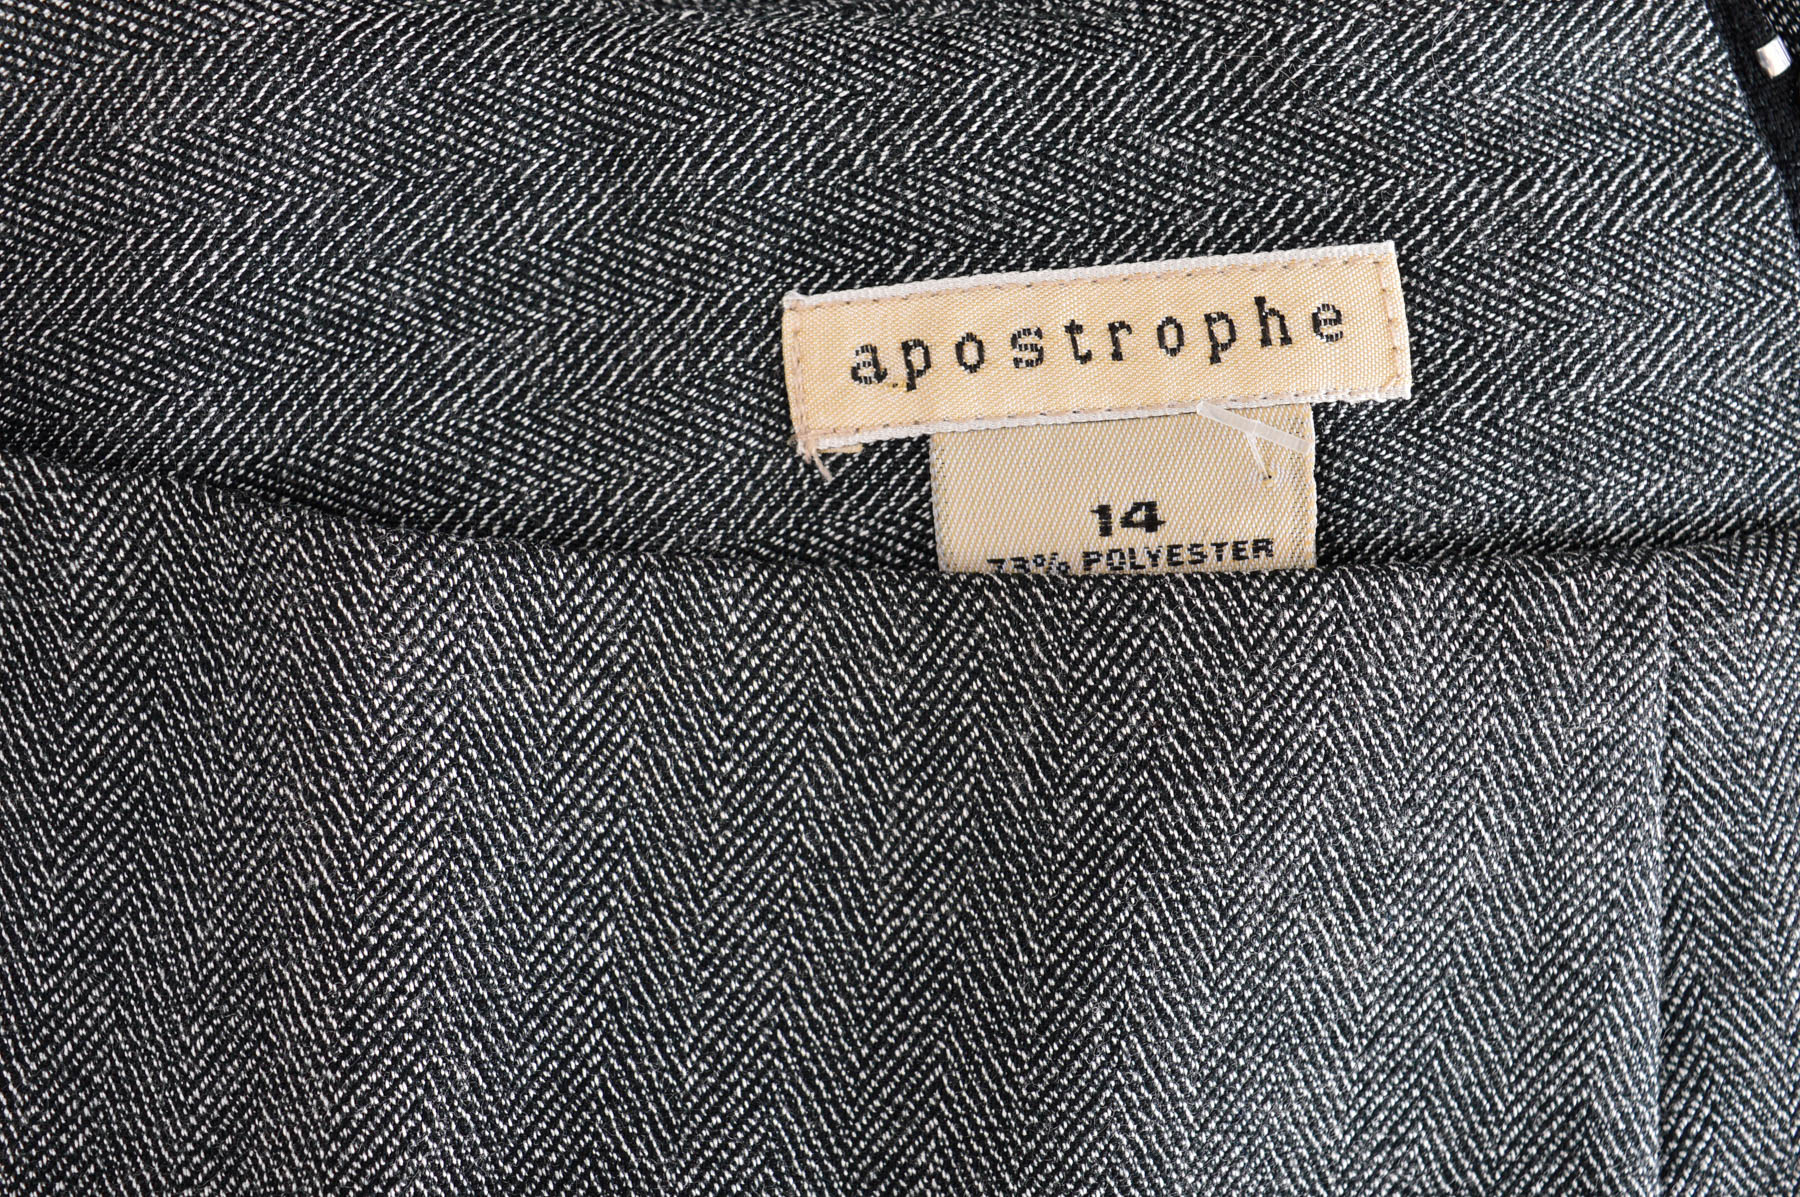 Skirt - Apostrophe - 2